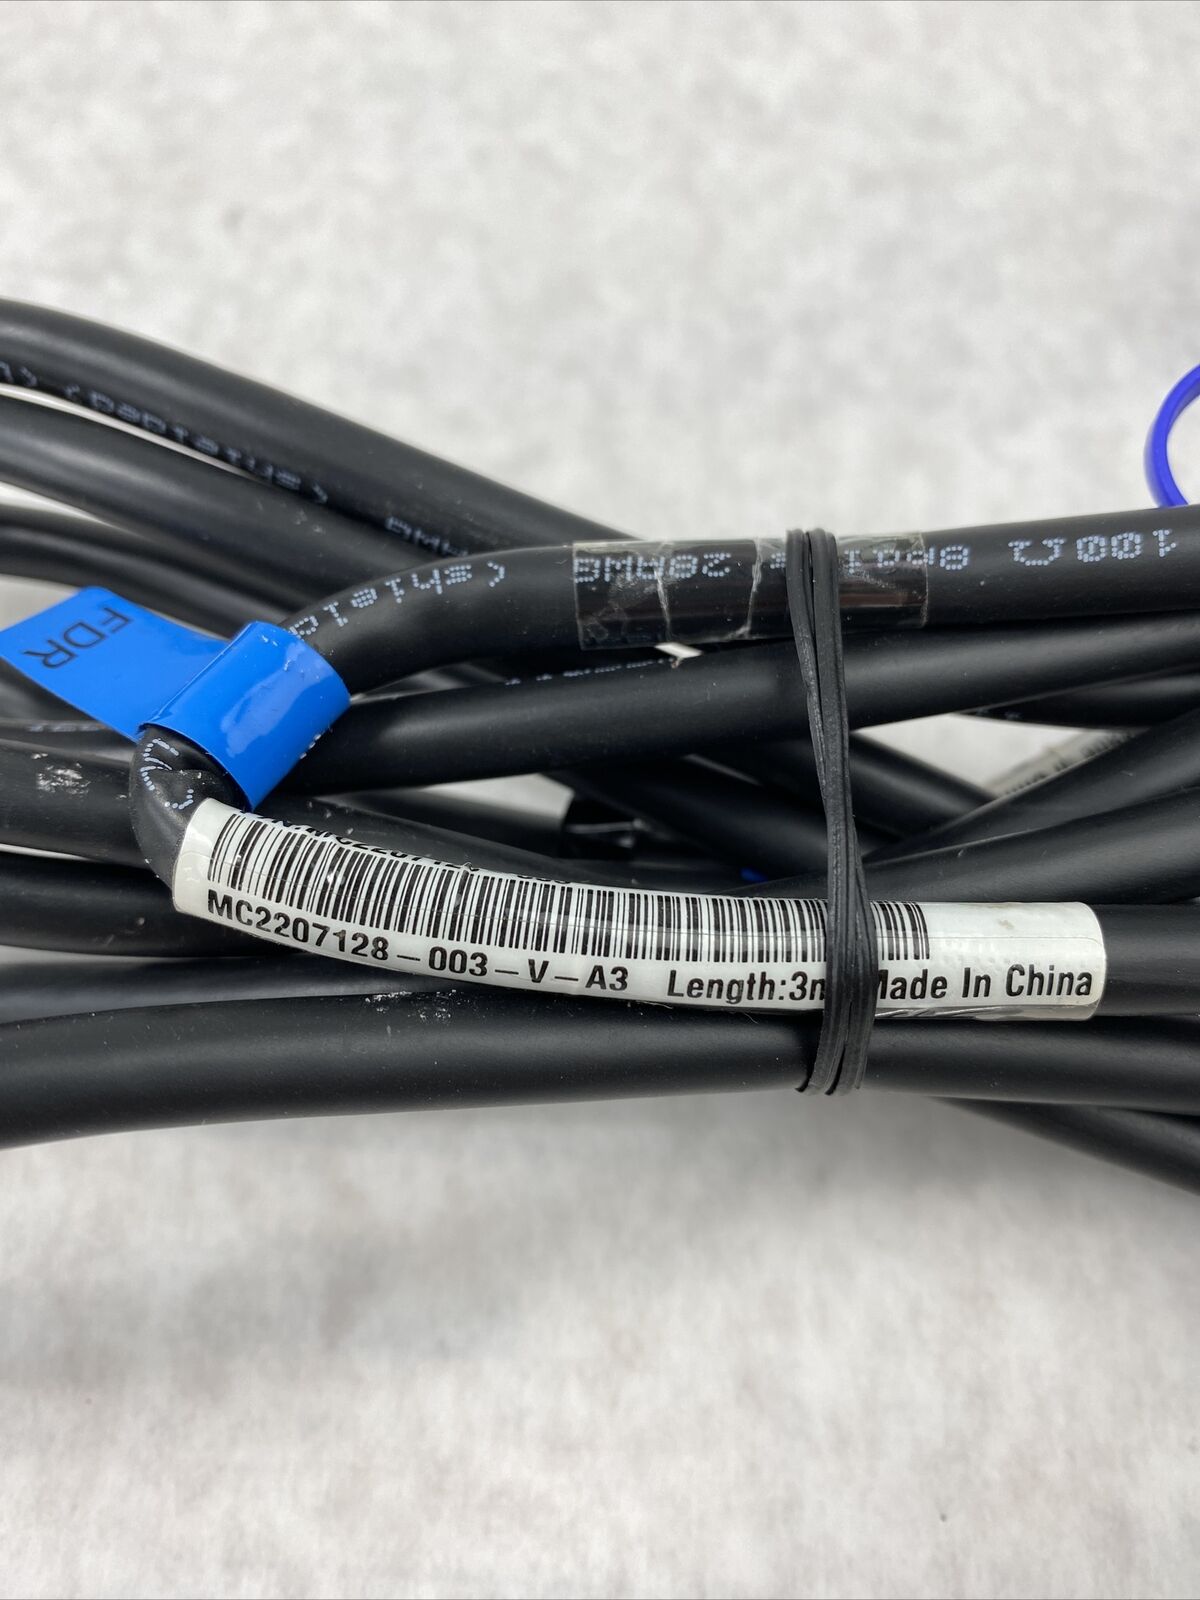 Mellanox MC2207128-003 40Gb/56Gb Ethernet/Infiniband FDR 3M QSFP Cable DAC VPI